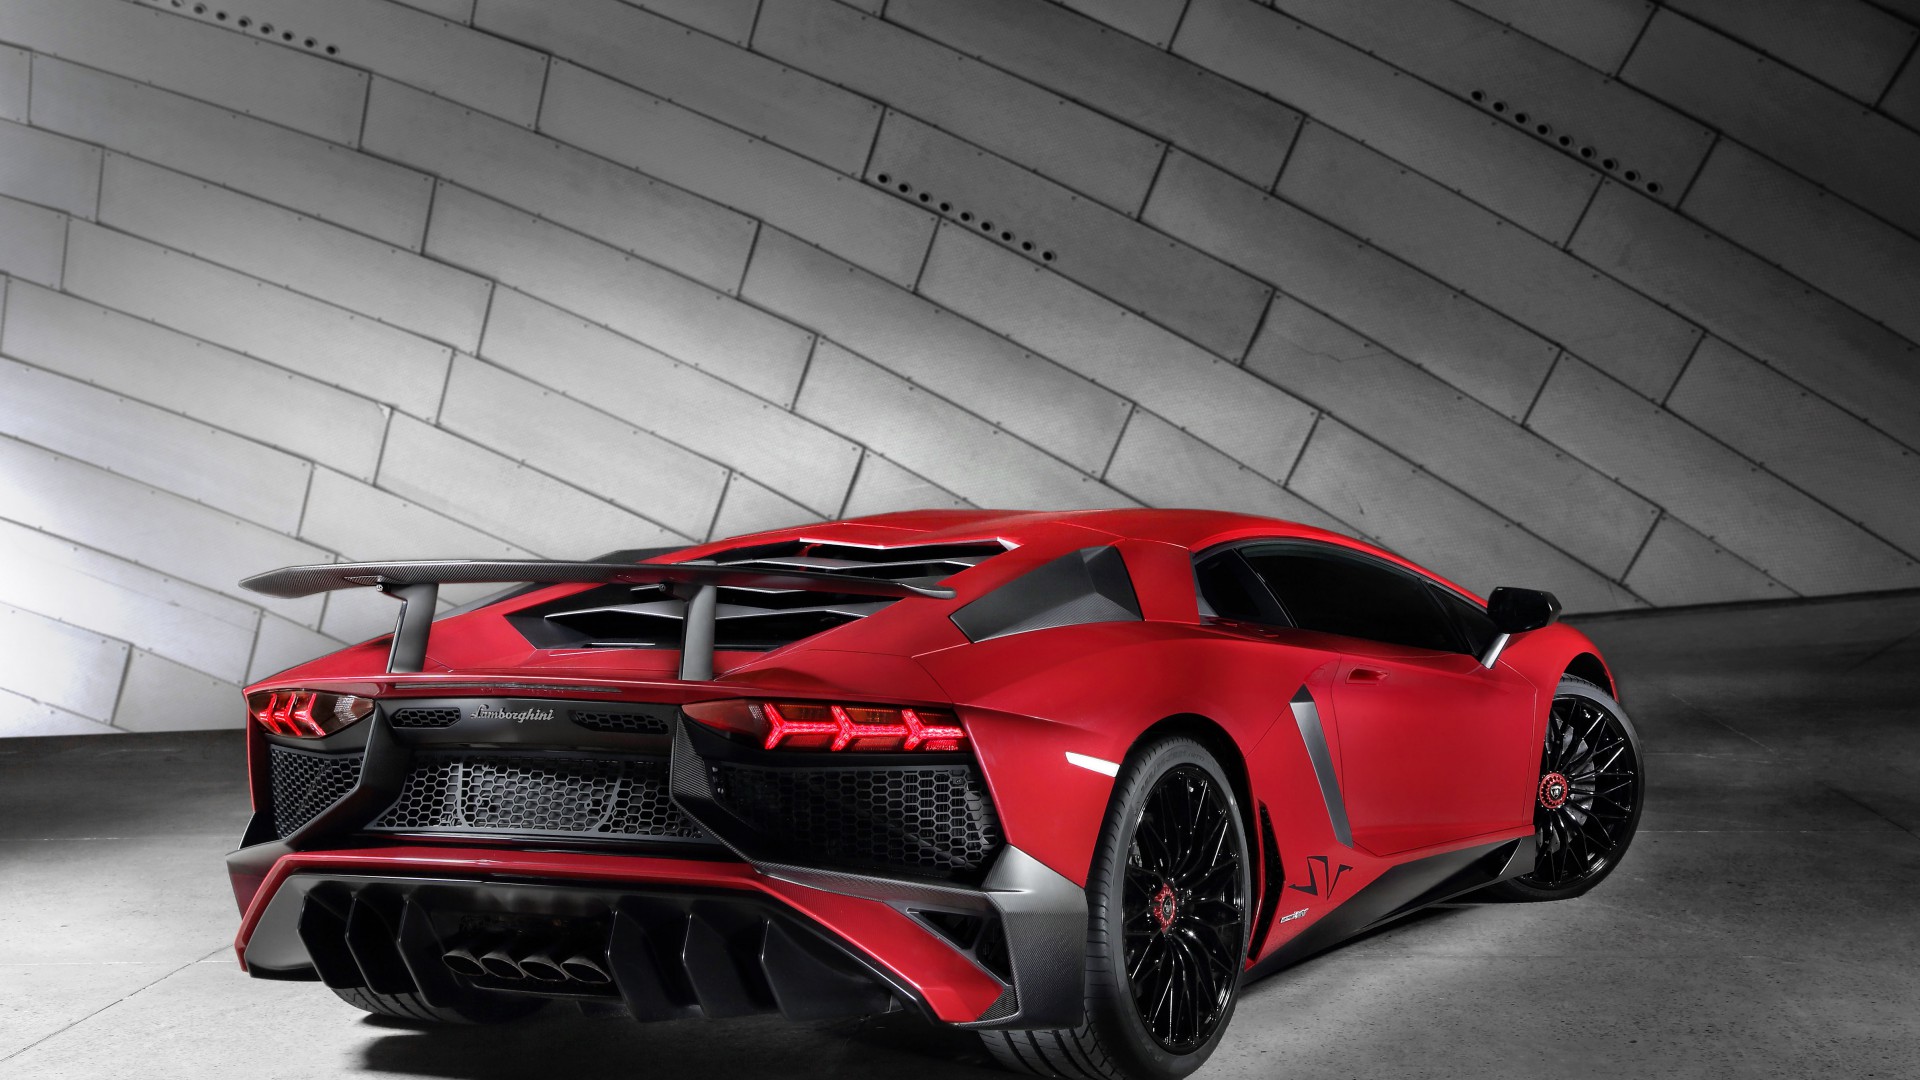 Lamborghini Aventador LP 750, Superveloce, coupe, red (horizontal)